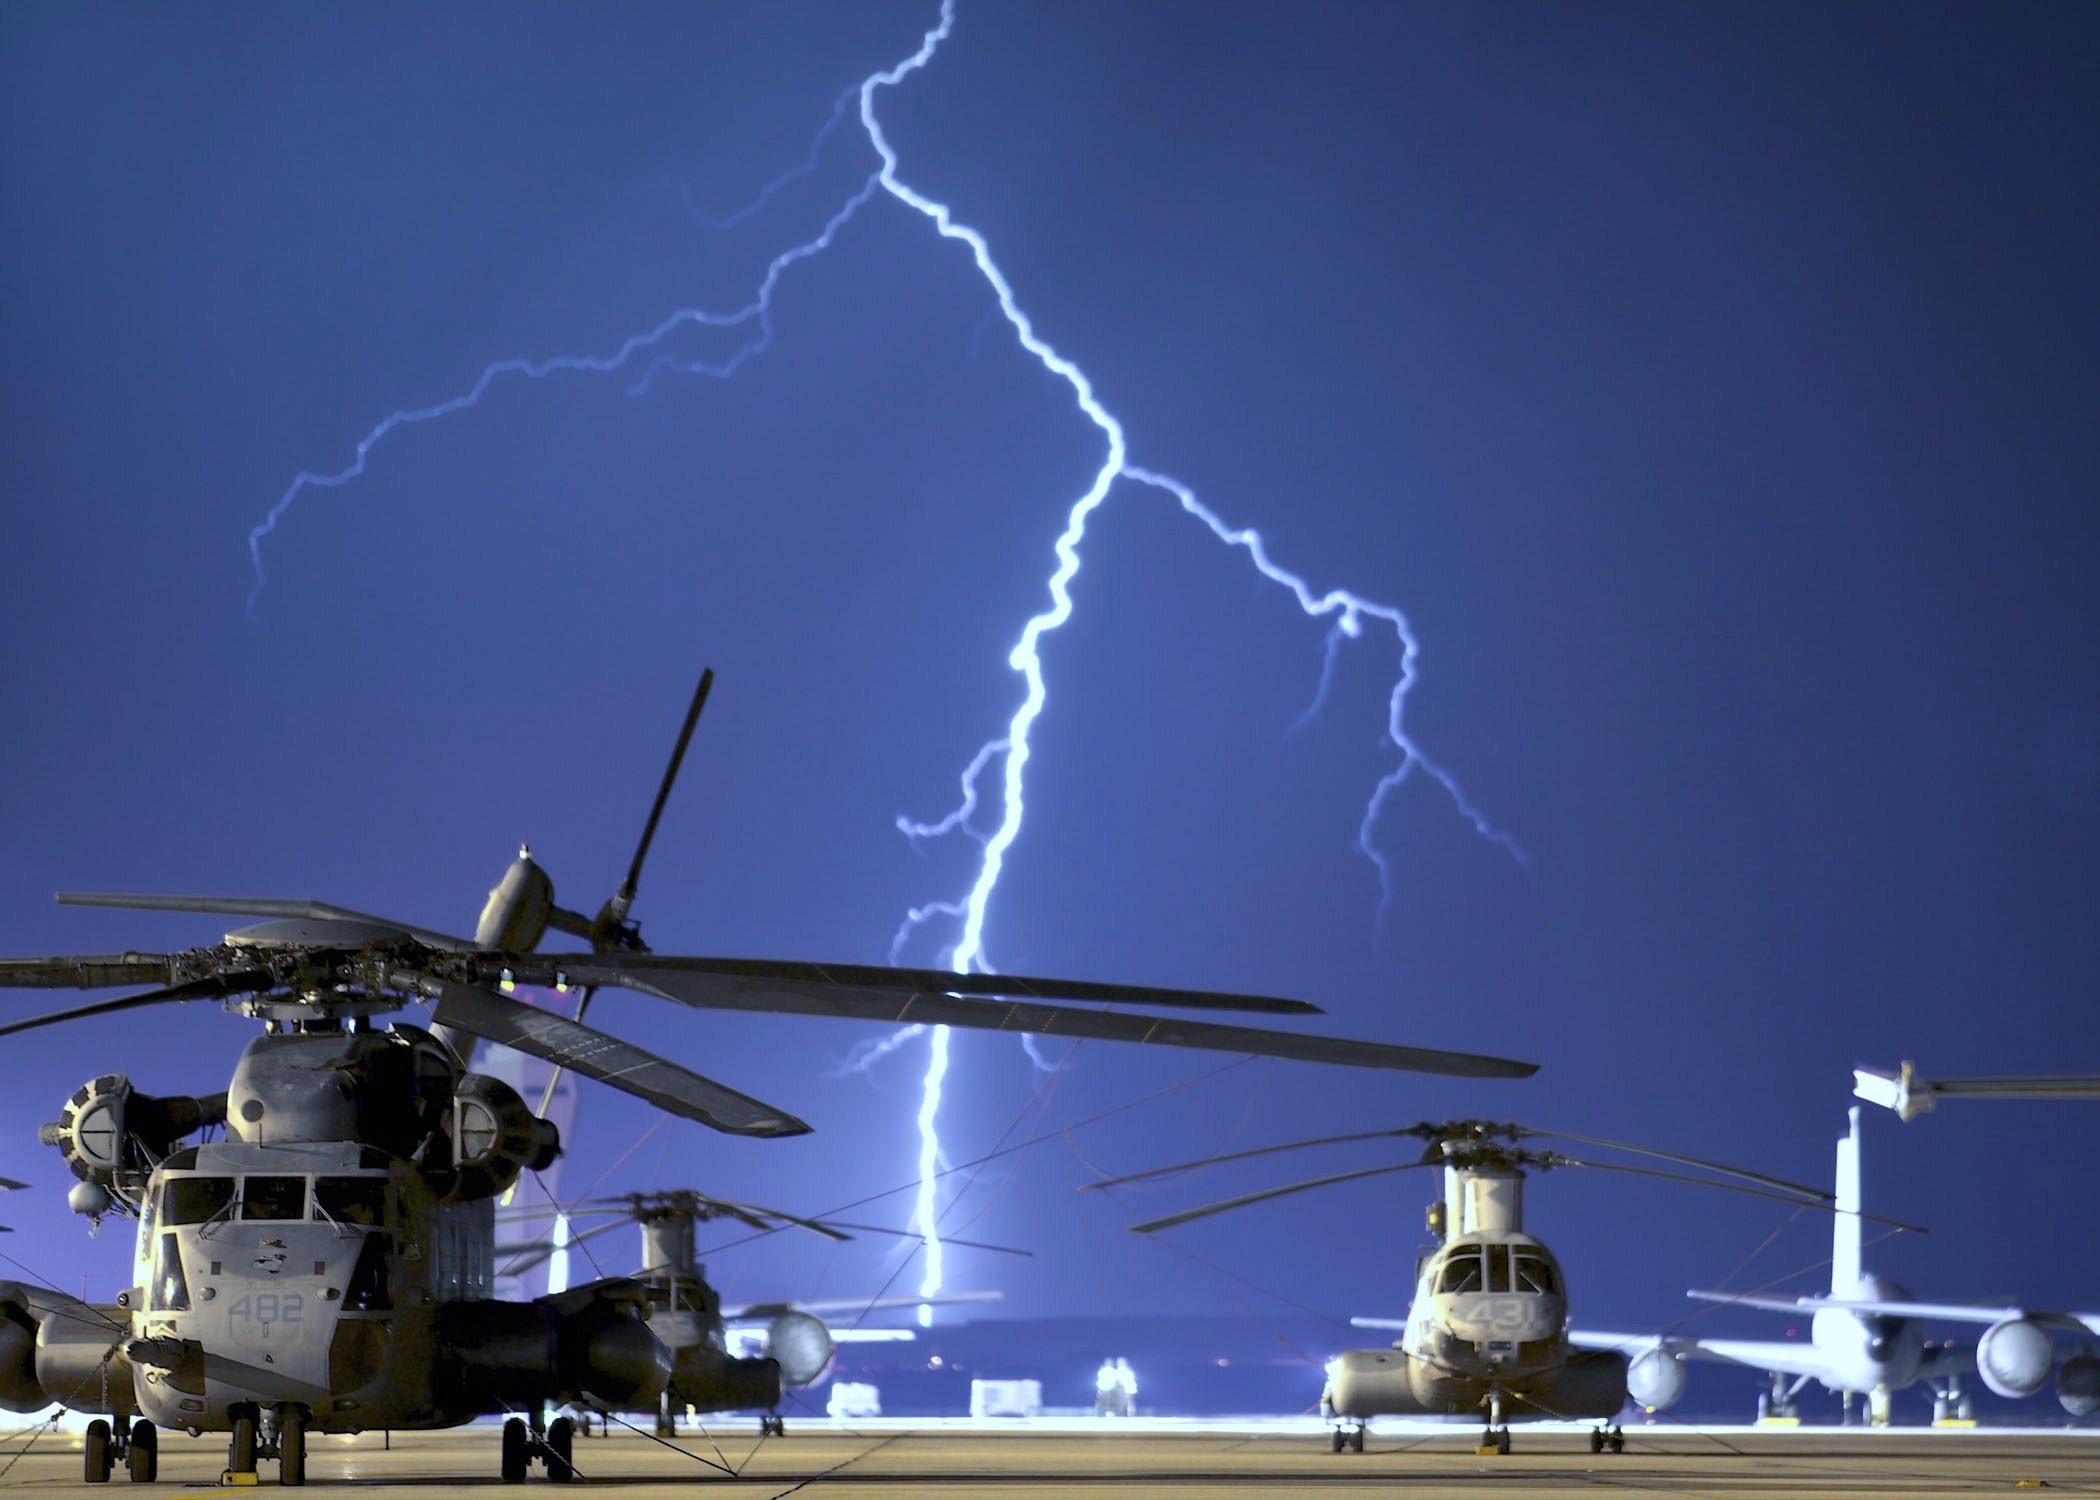 helicopters, vehicles, lightning - desktop wallpaper